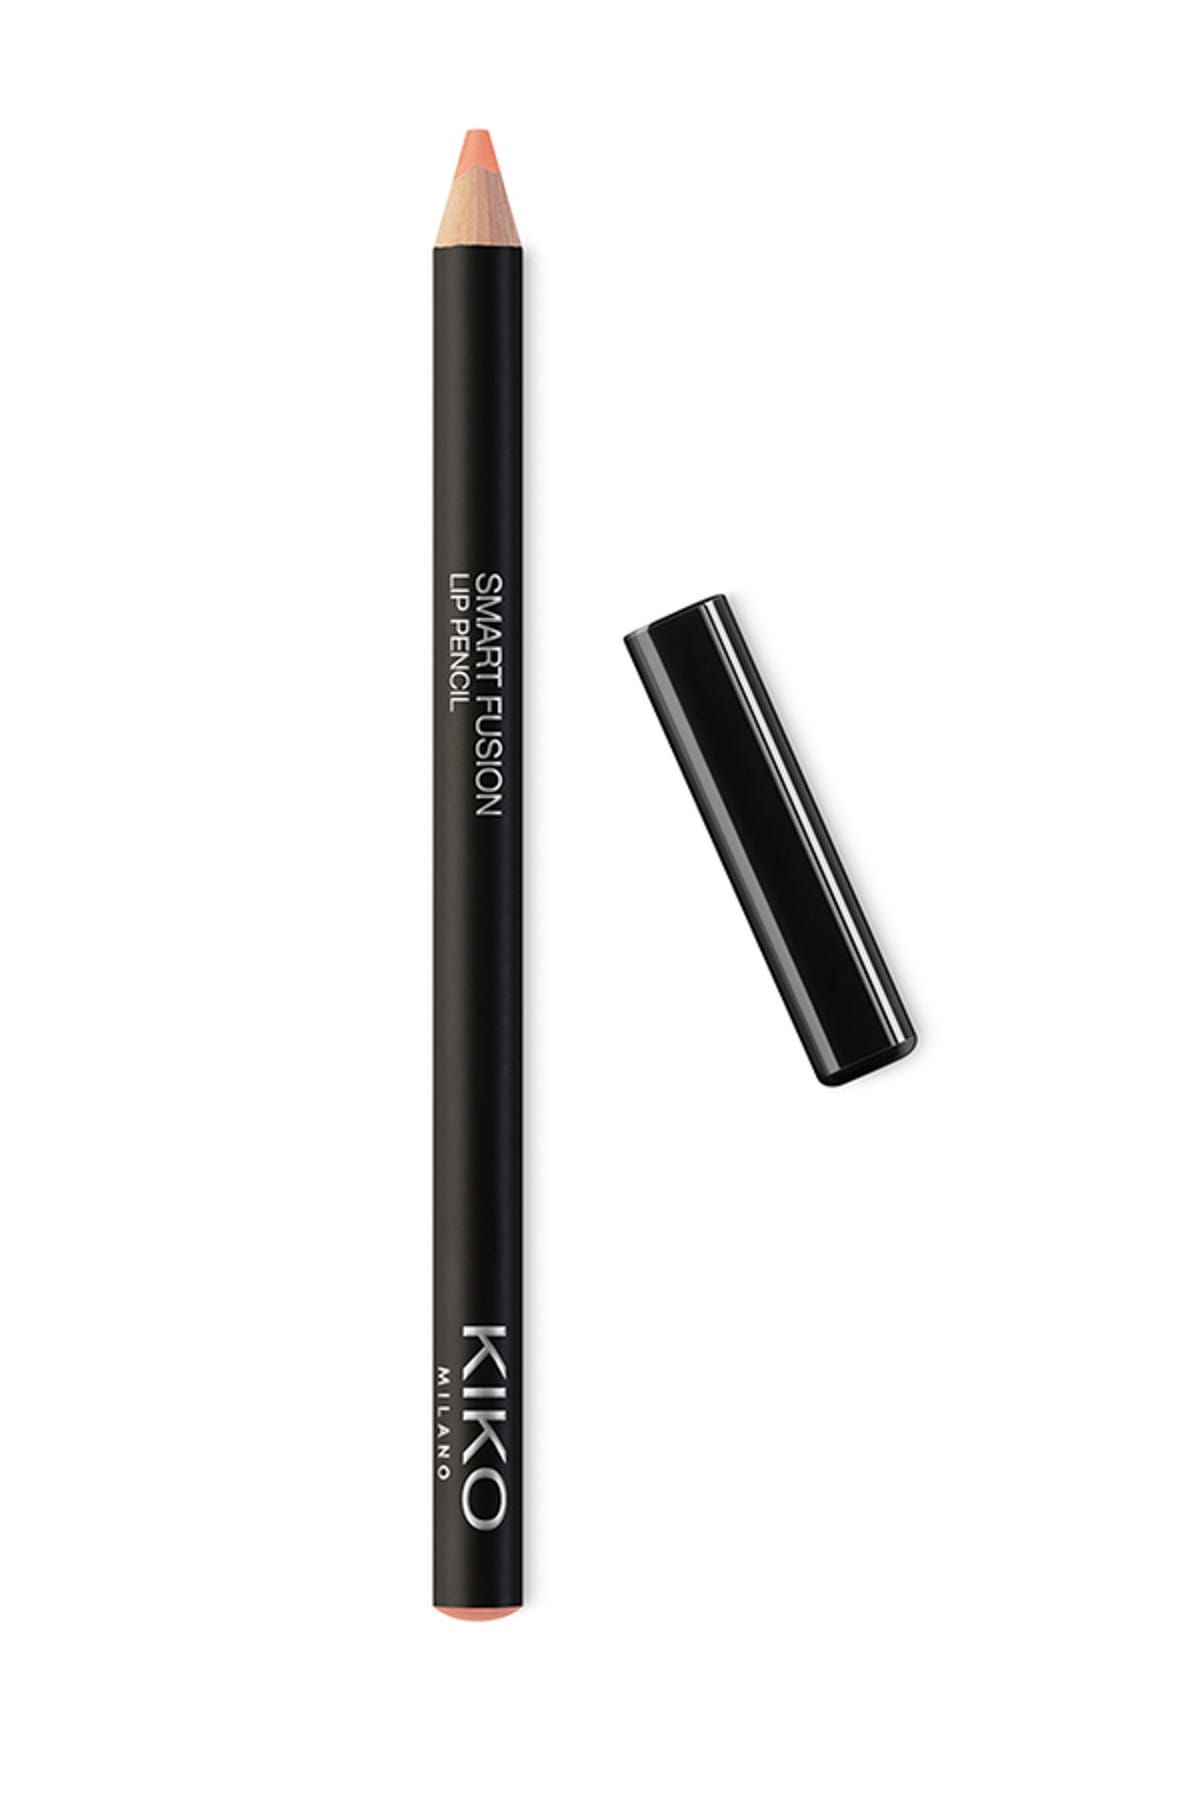 KIKO Dudak Kalemi - Smart Fusion Lip Pencil 502 Peachy Nude 8025272625548